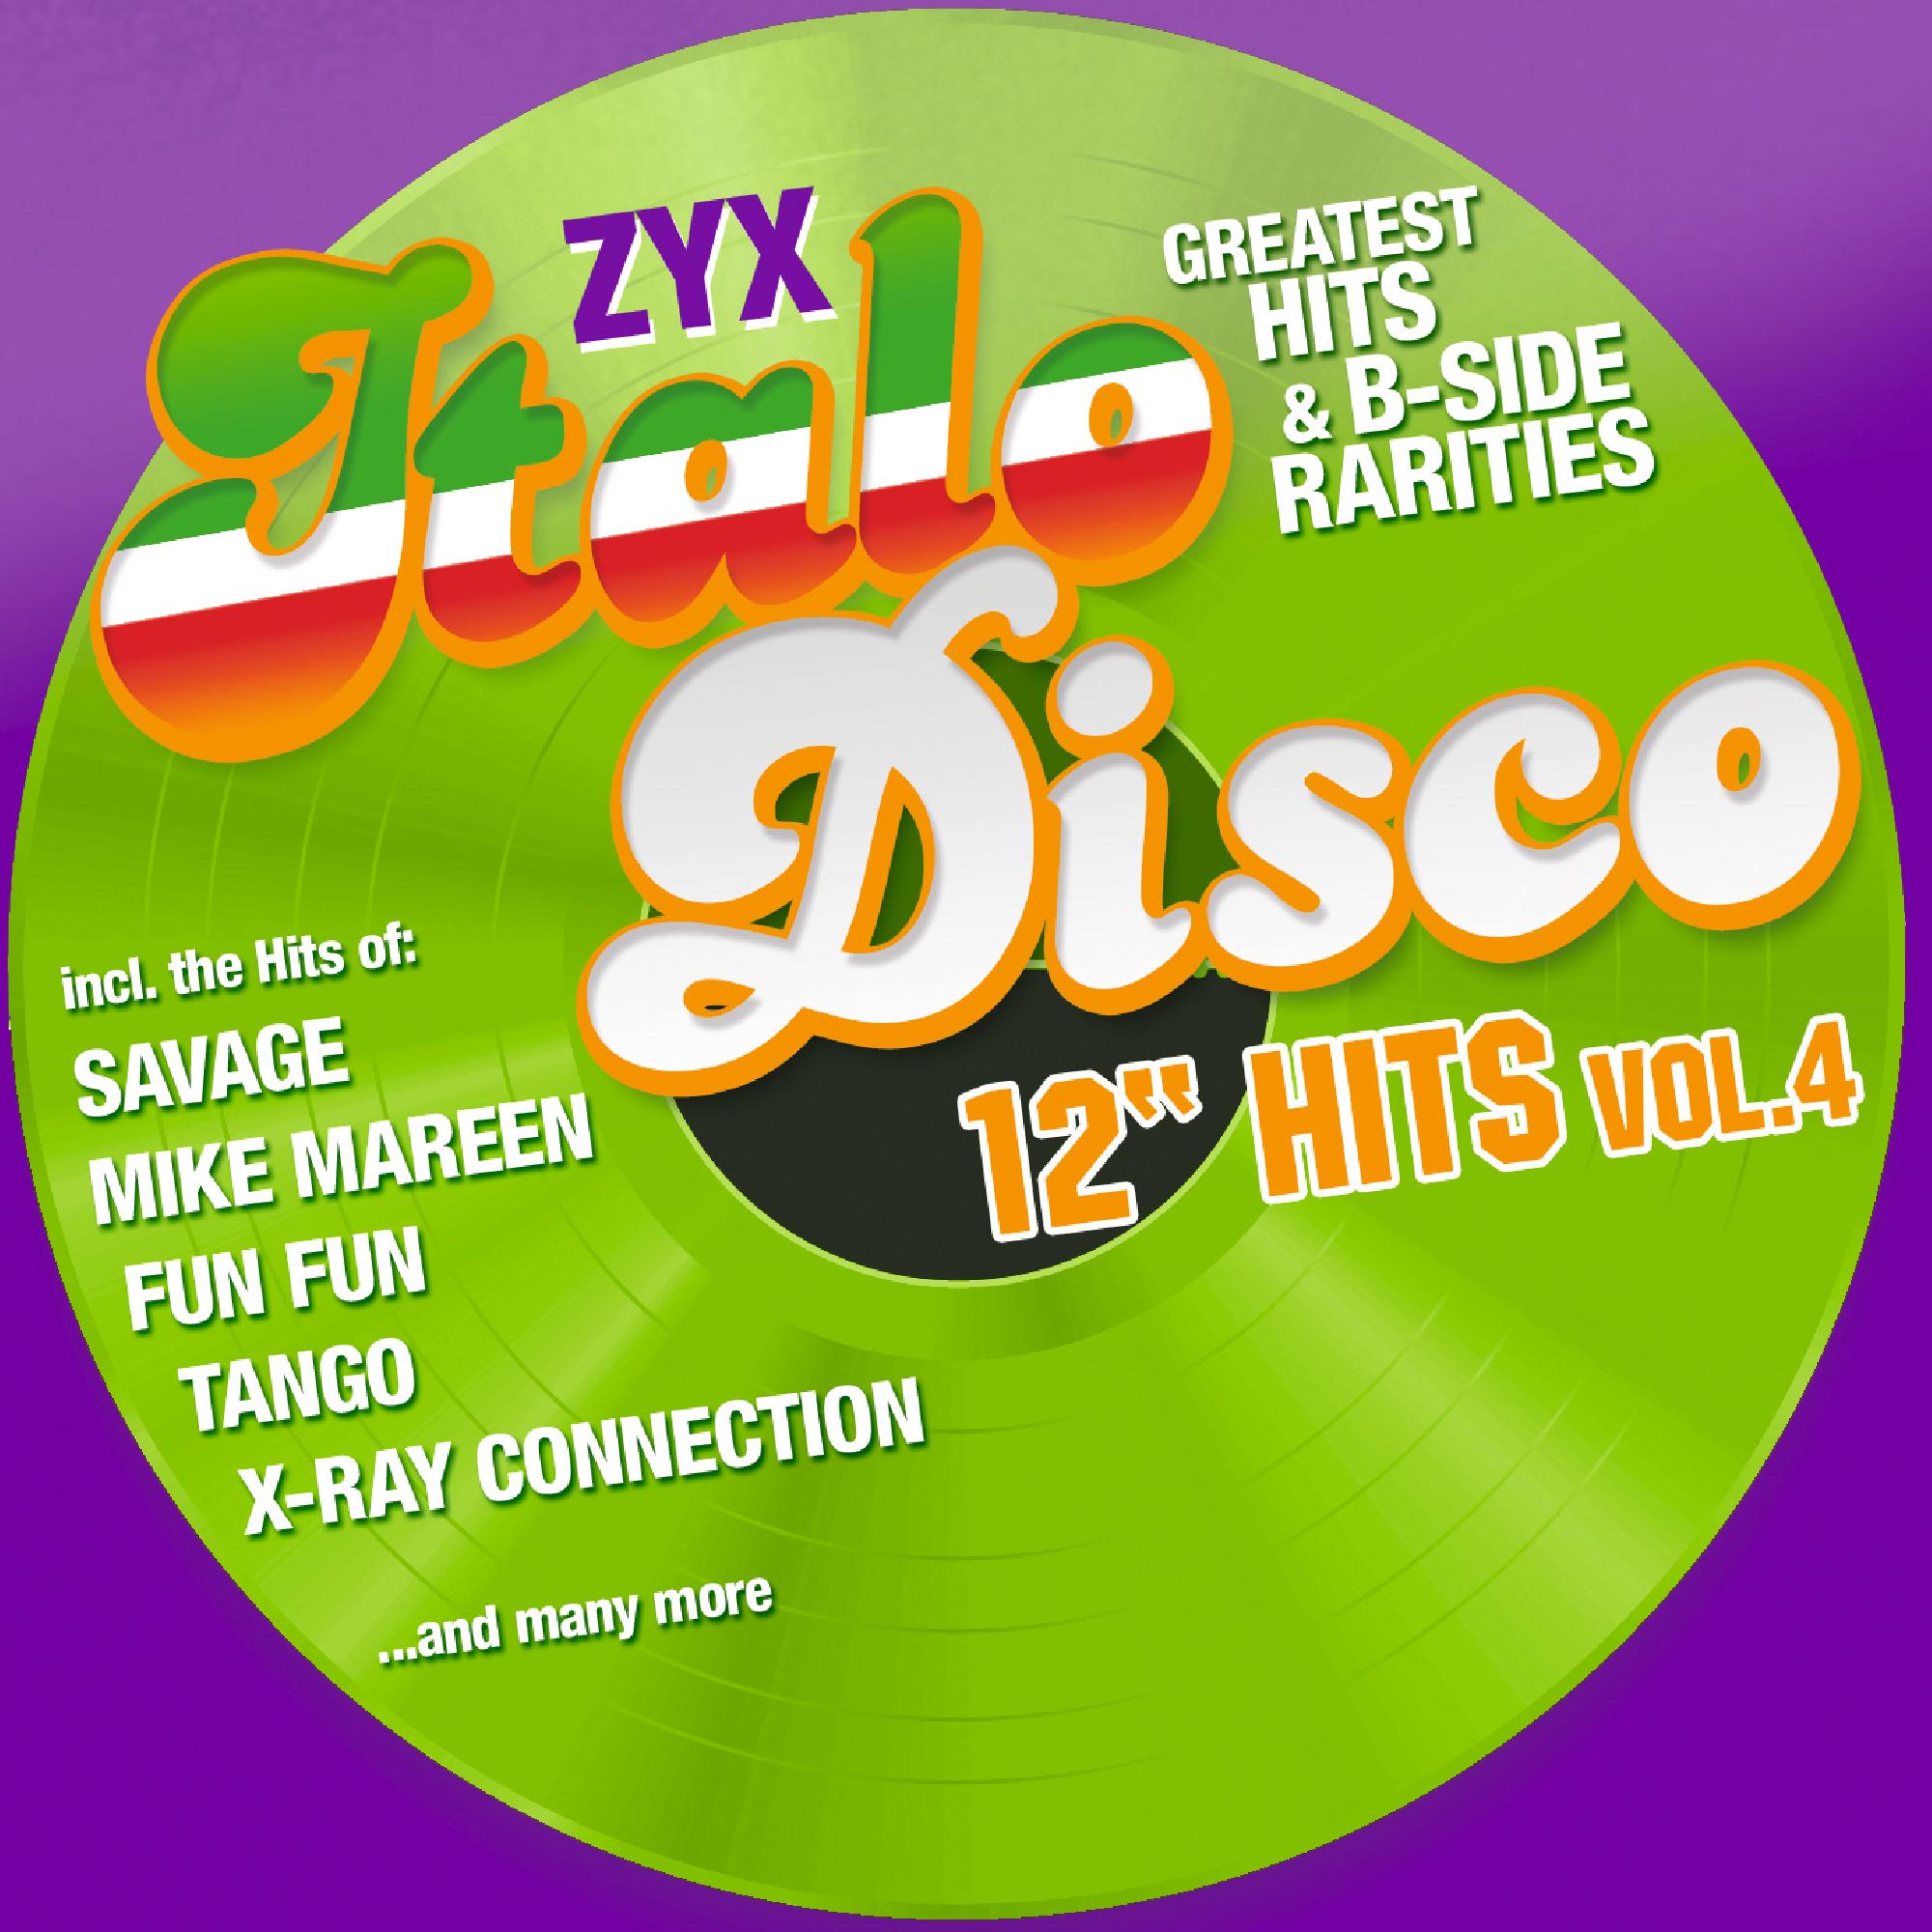 Disco diamond collection. Итало диско. Итало диско итало диско. Disco Hits. Italo Disco Hits Vol.